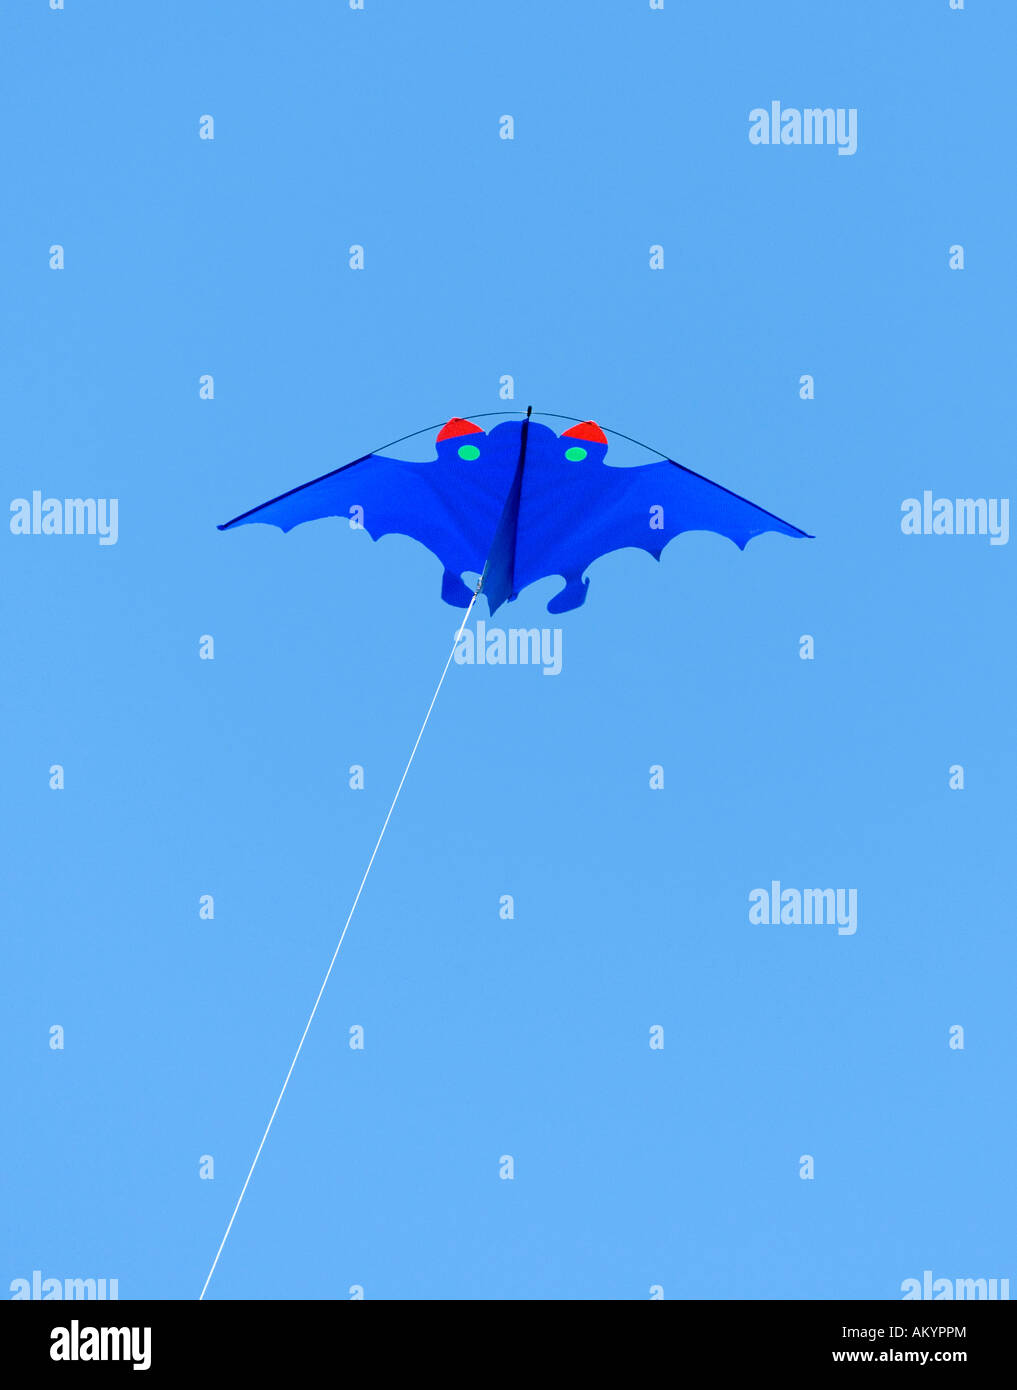 A bat kite Stock Photo